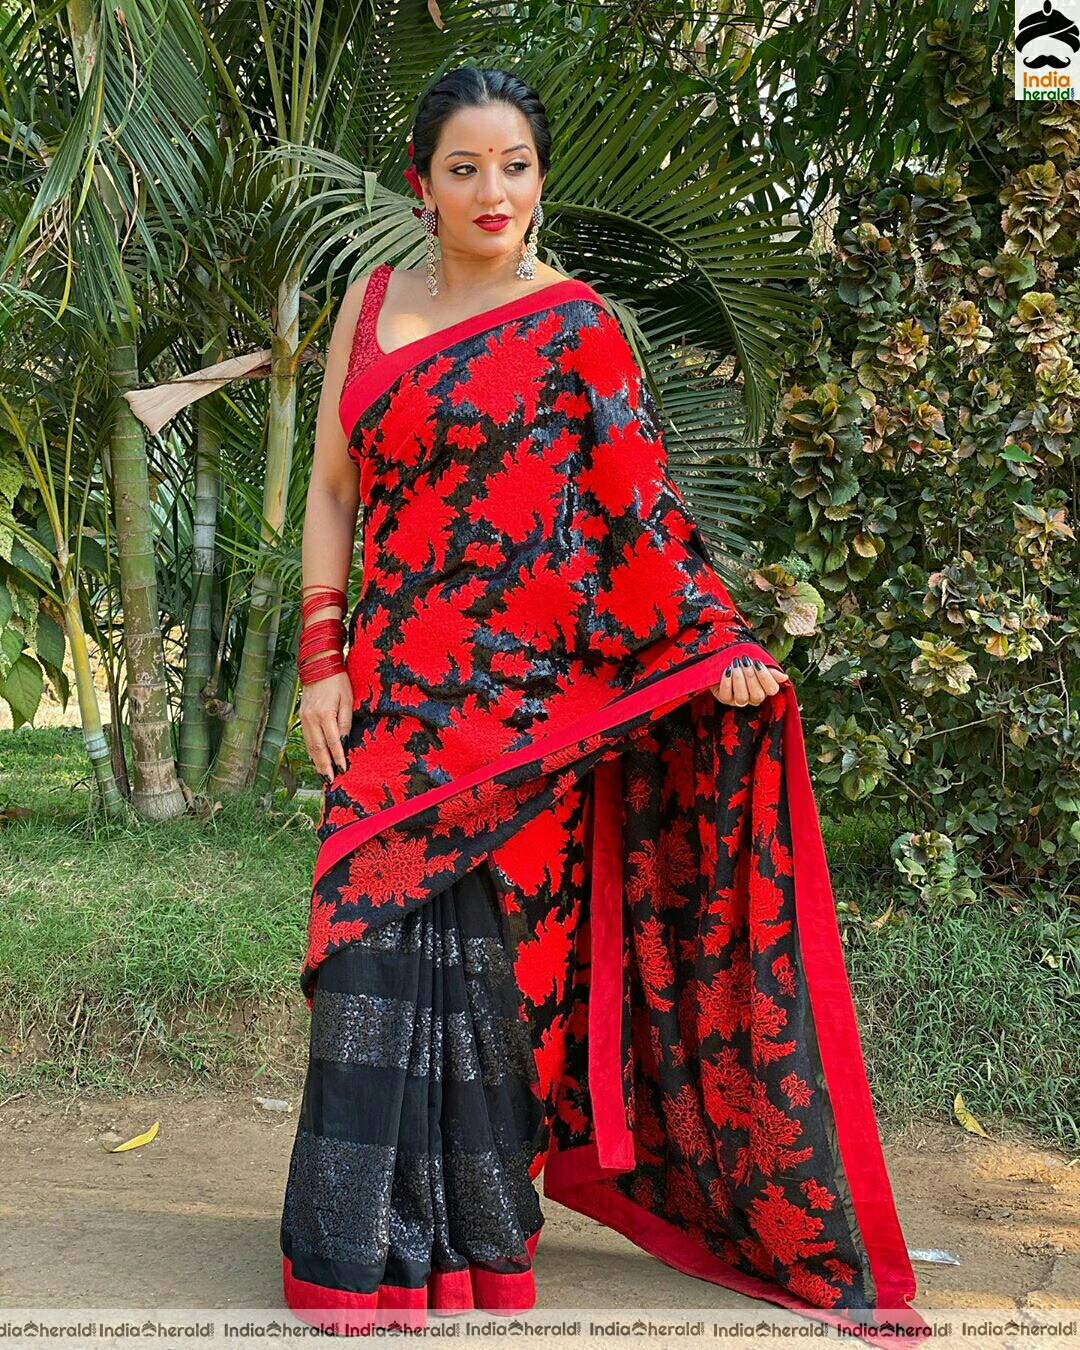 Monalisa Red Saree Stills